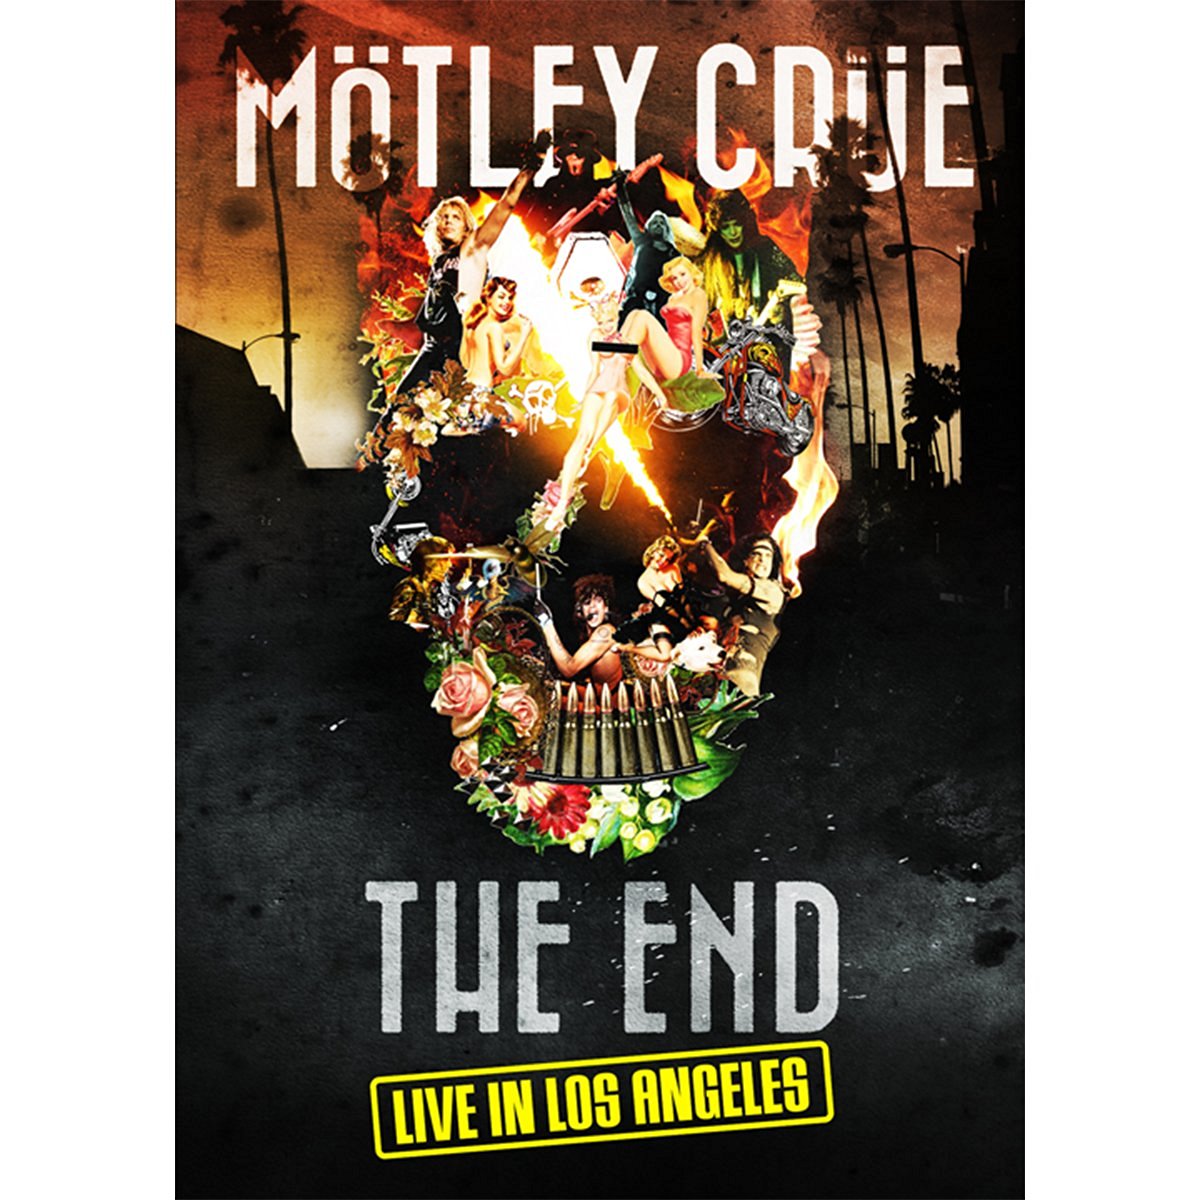 「THE END」ラスト・ライヴ・イン・ロサンゼルス 2015年12月31日+劇場公開ドキュメンタリー映画「THE END」